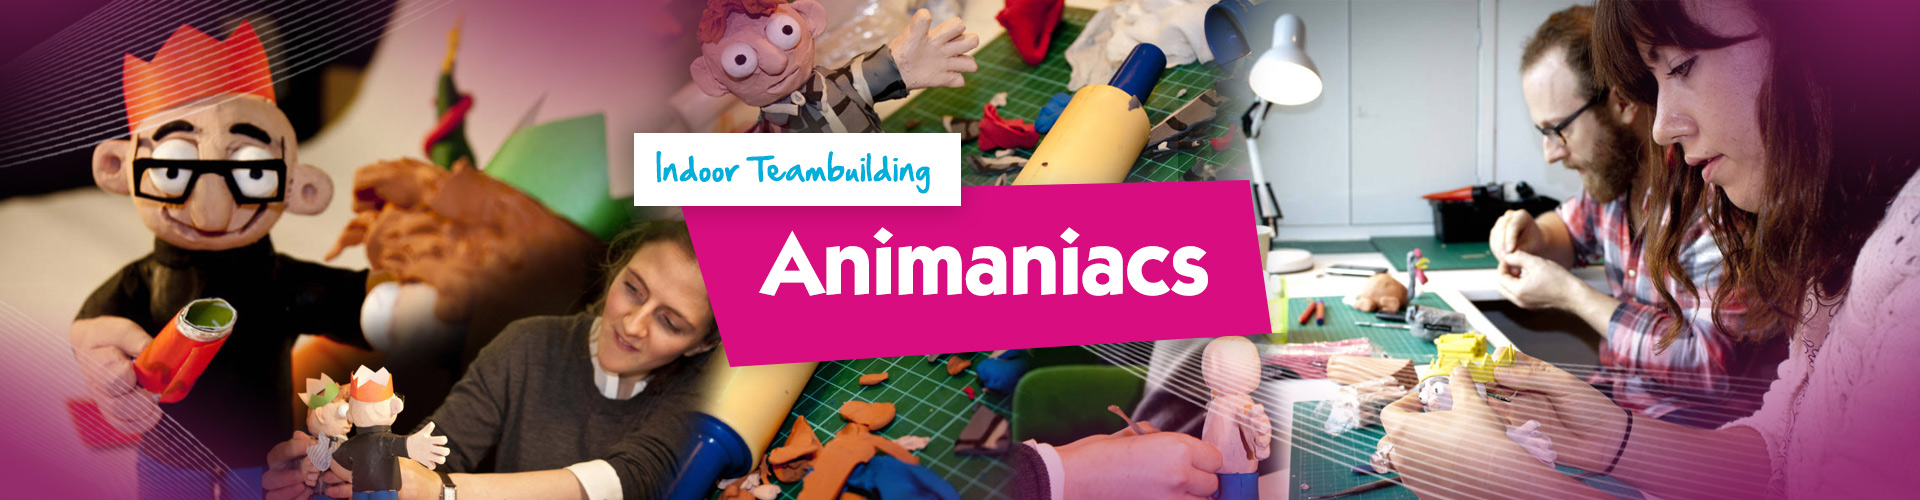 Teambuilding | Animaniacs